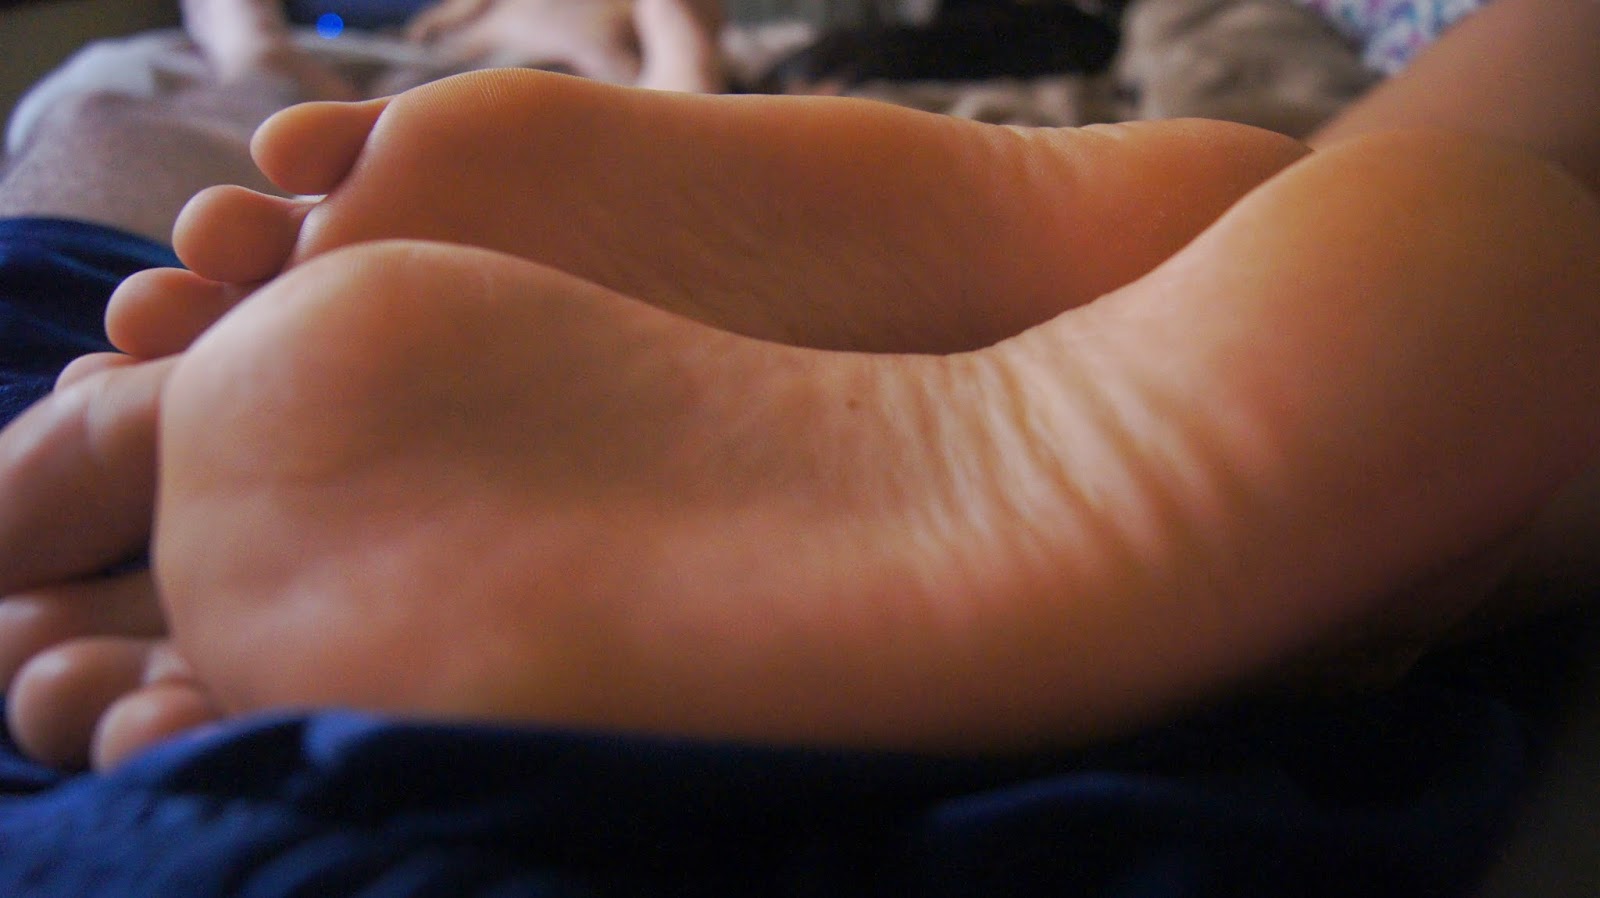 Tranny anal fuck sexy feet soles image